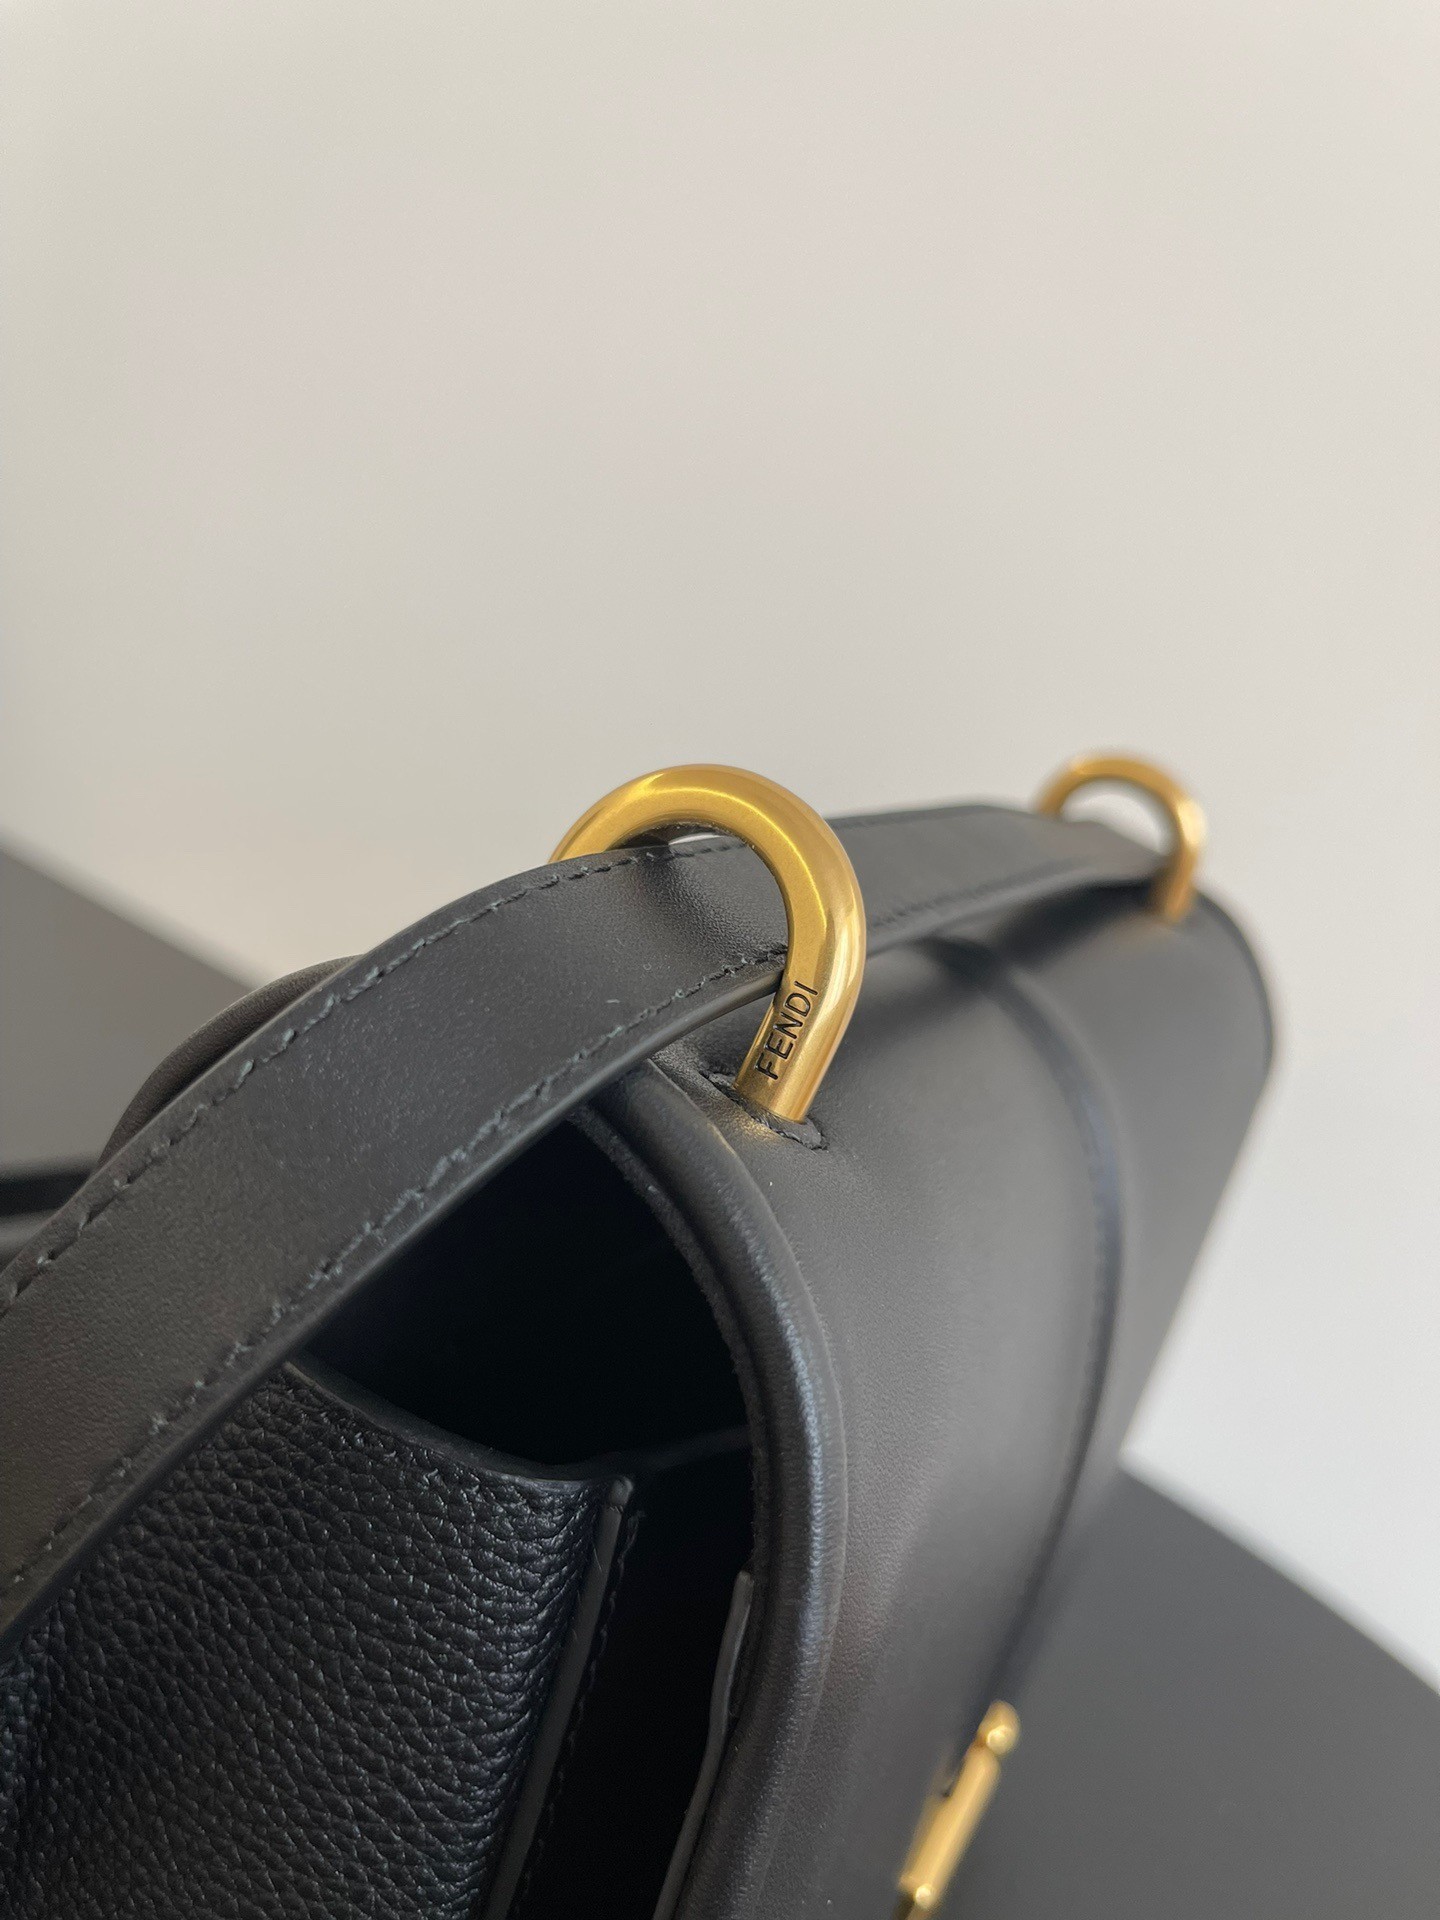 Fendi C’mon Medium Bag in Black Calfskin 499